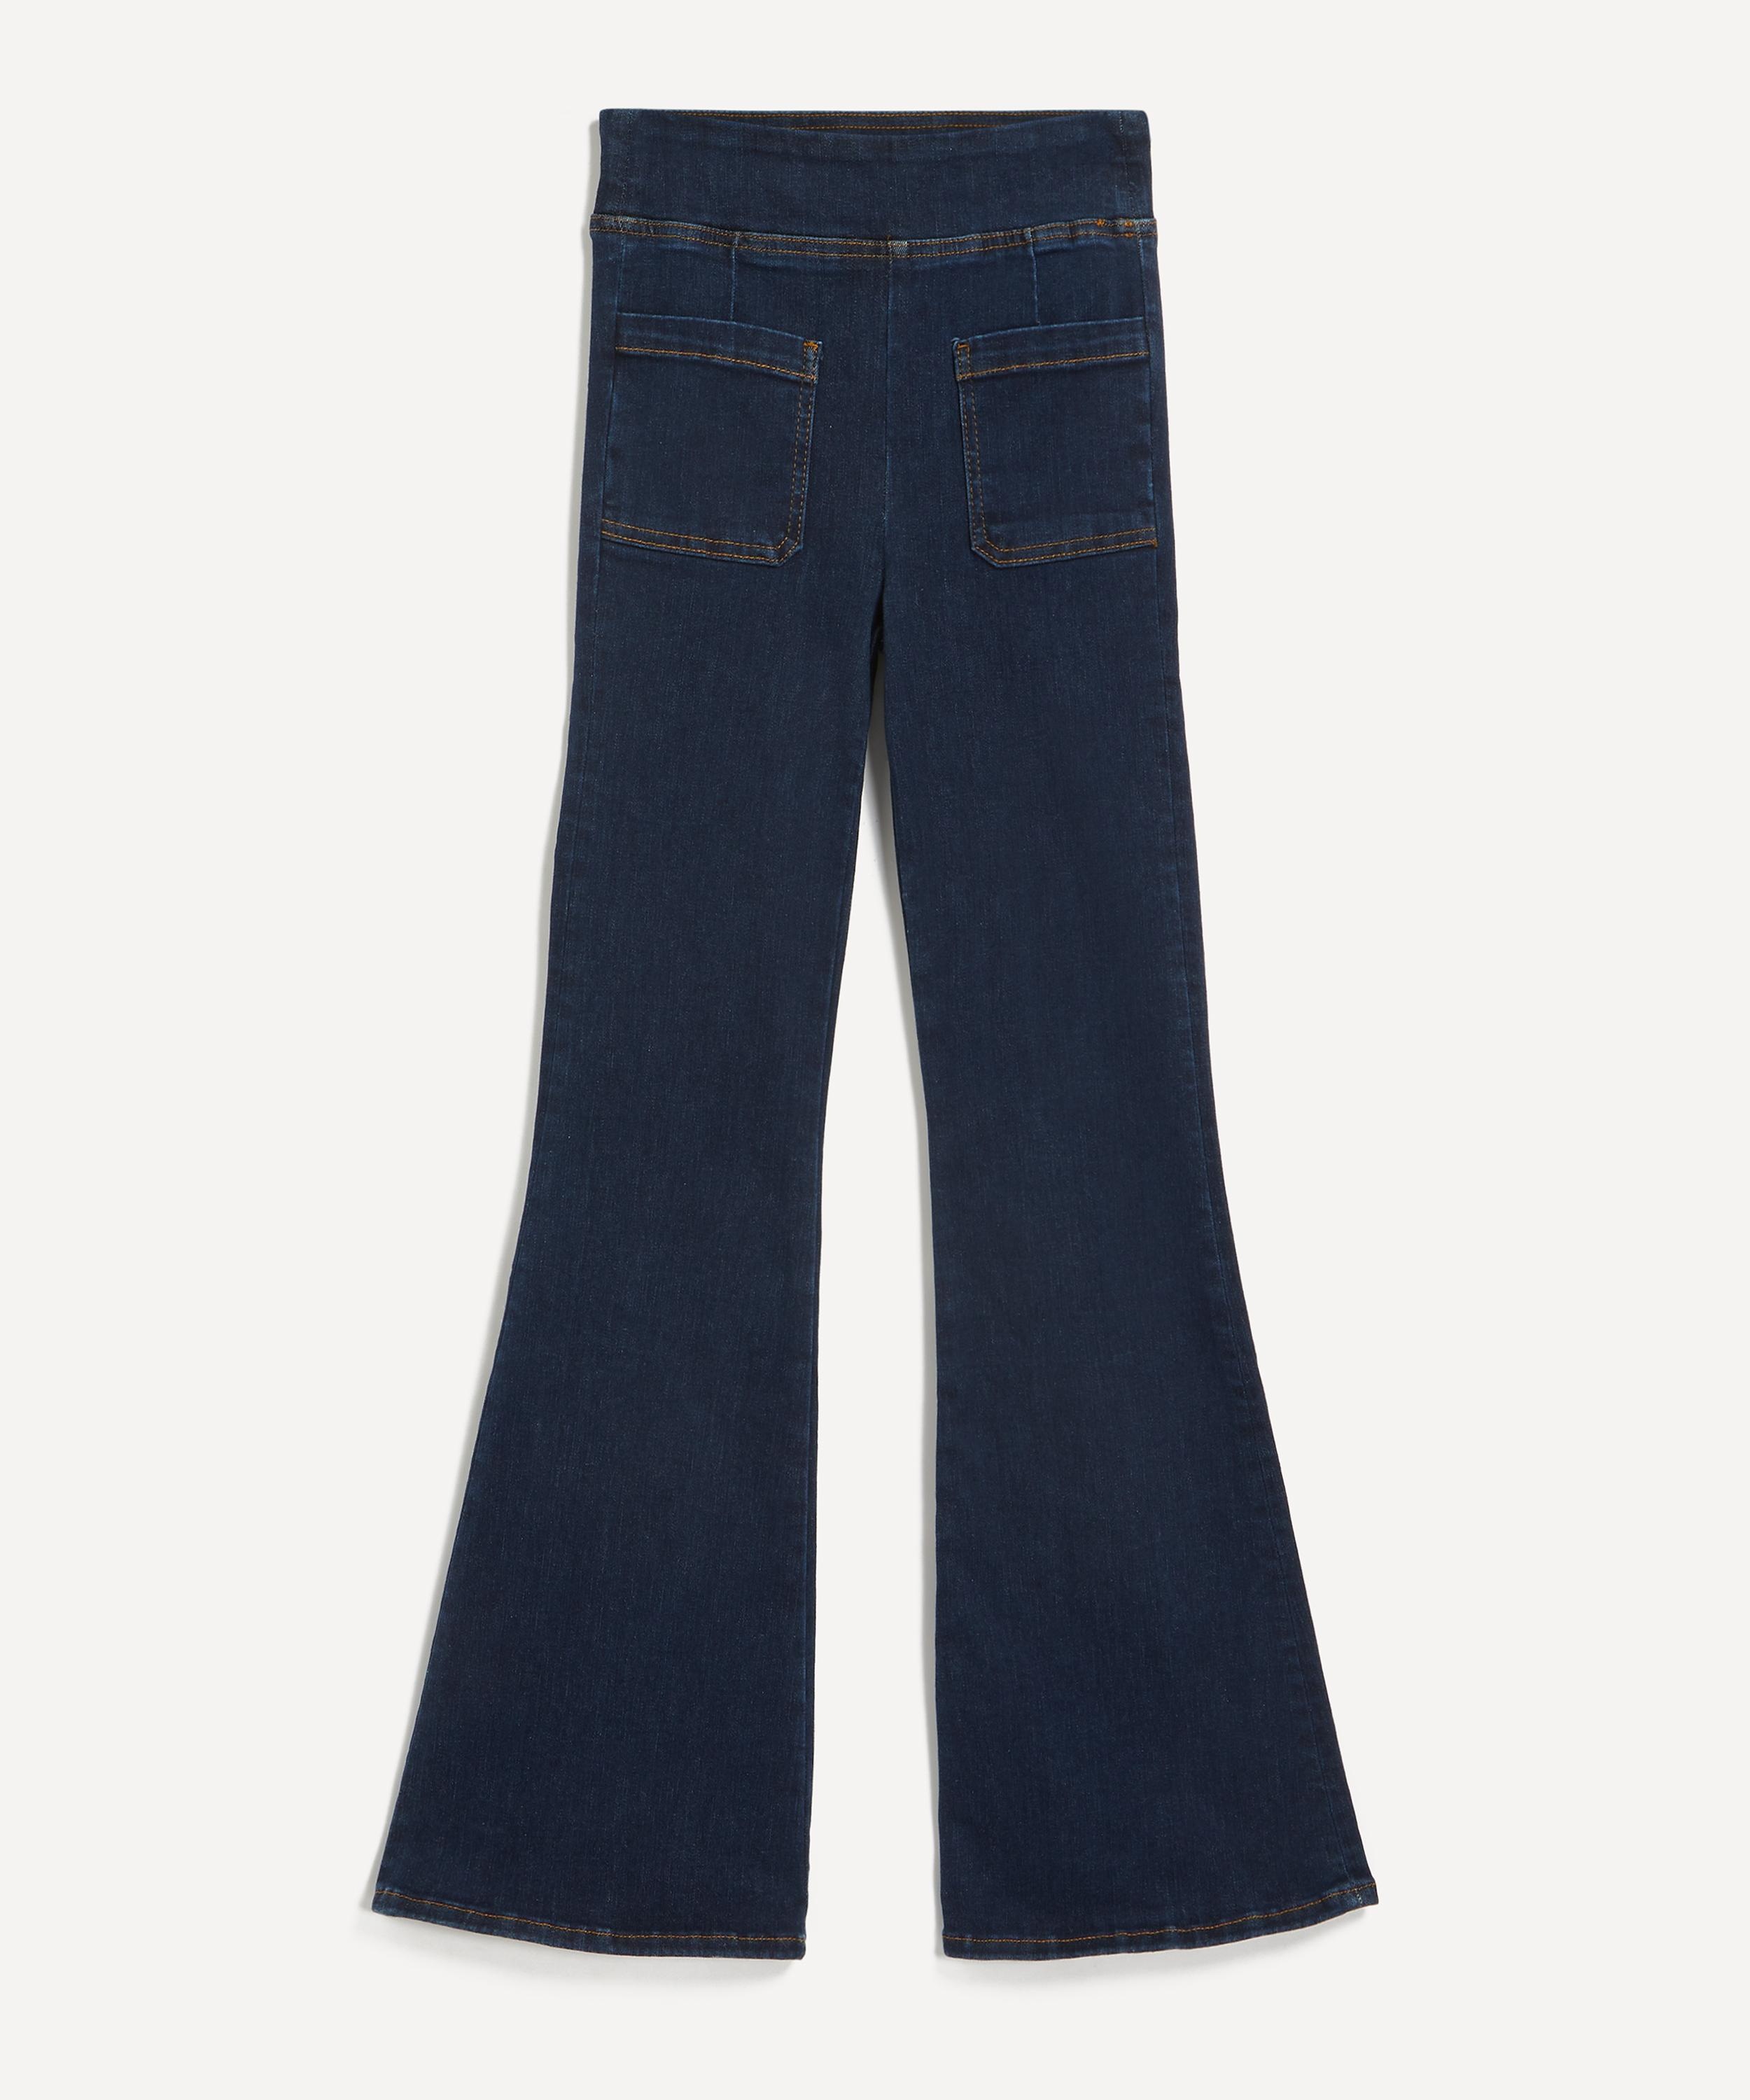 Bardot Jetset High-Rise Flare Jeans - 1